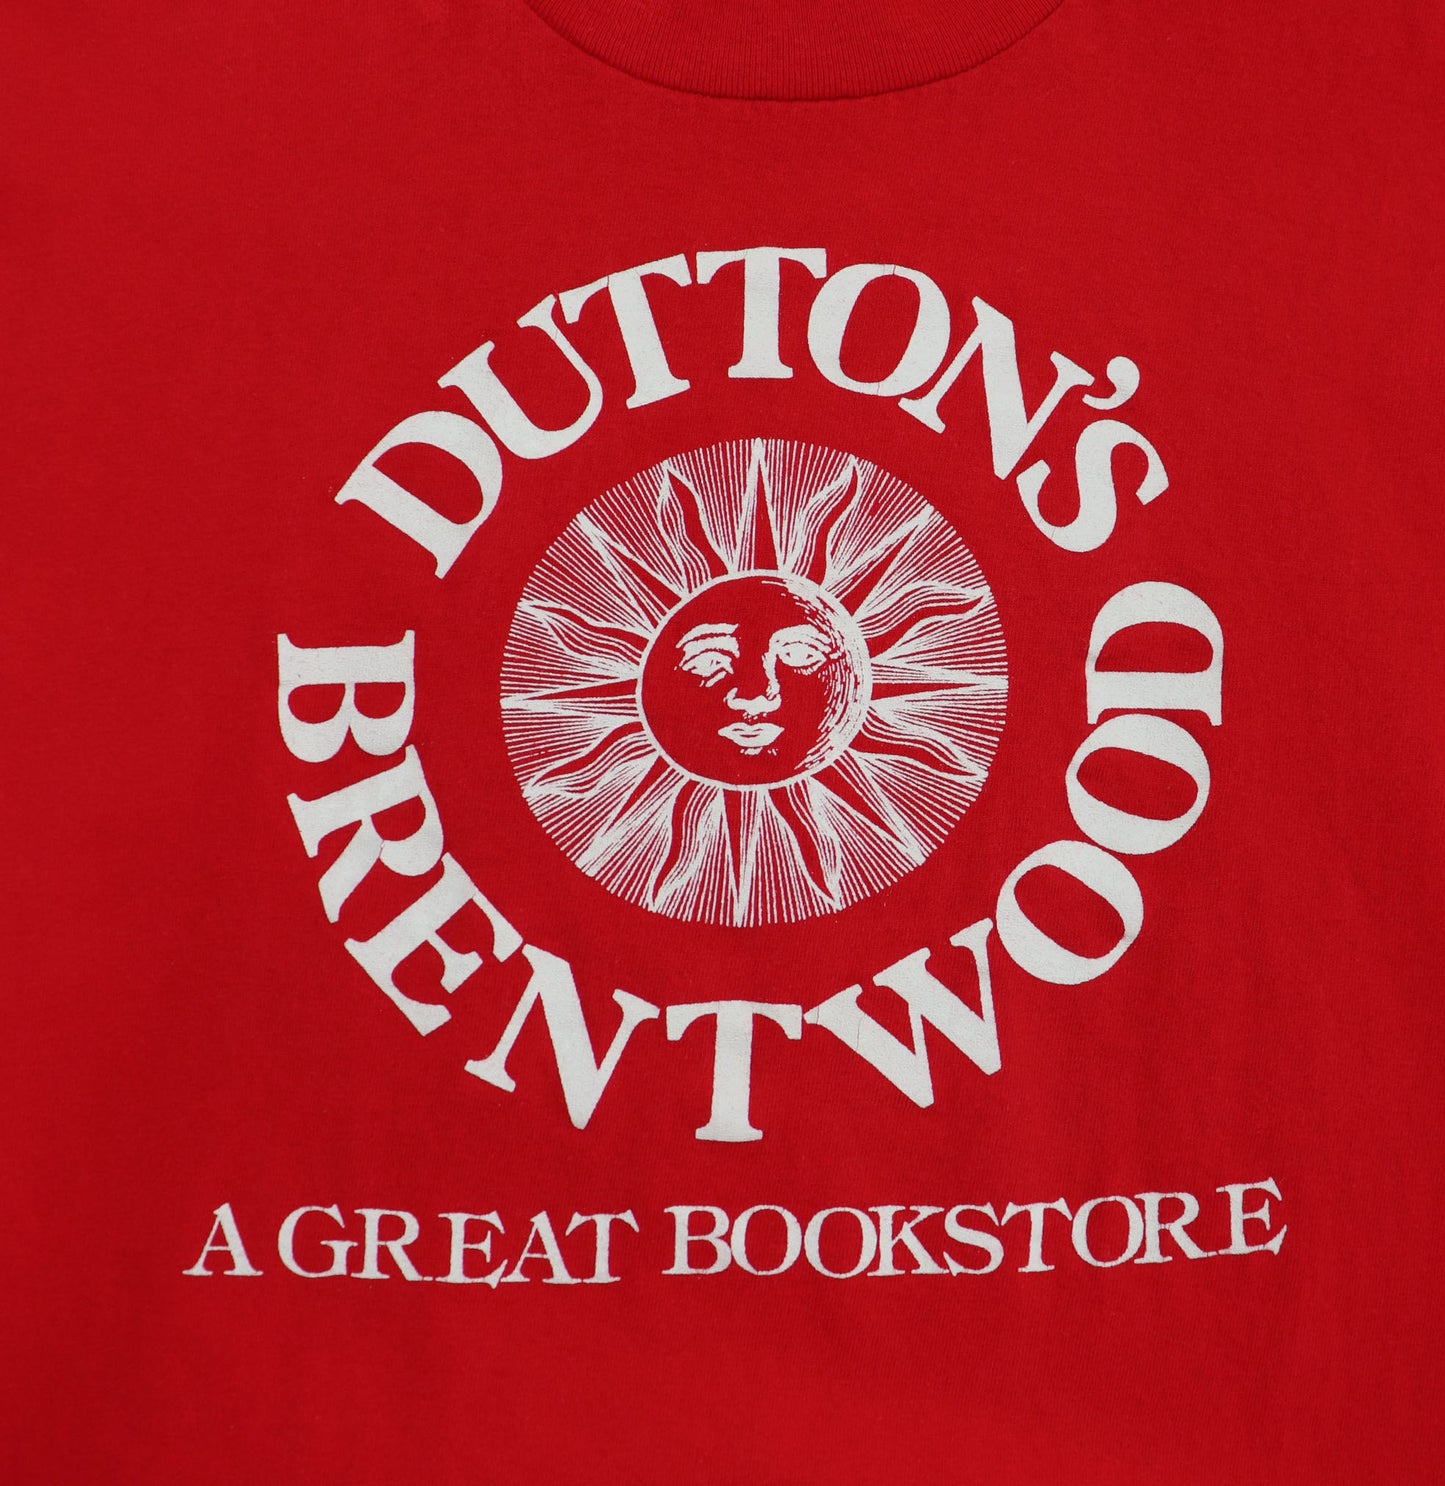 DUTTON'S BRENTWOOD